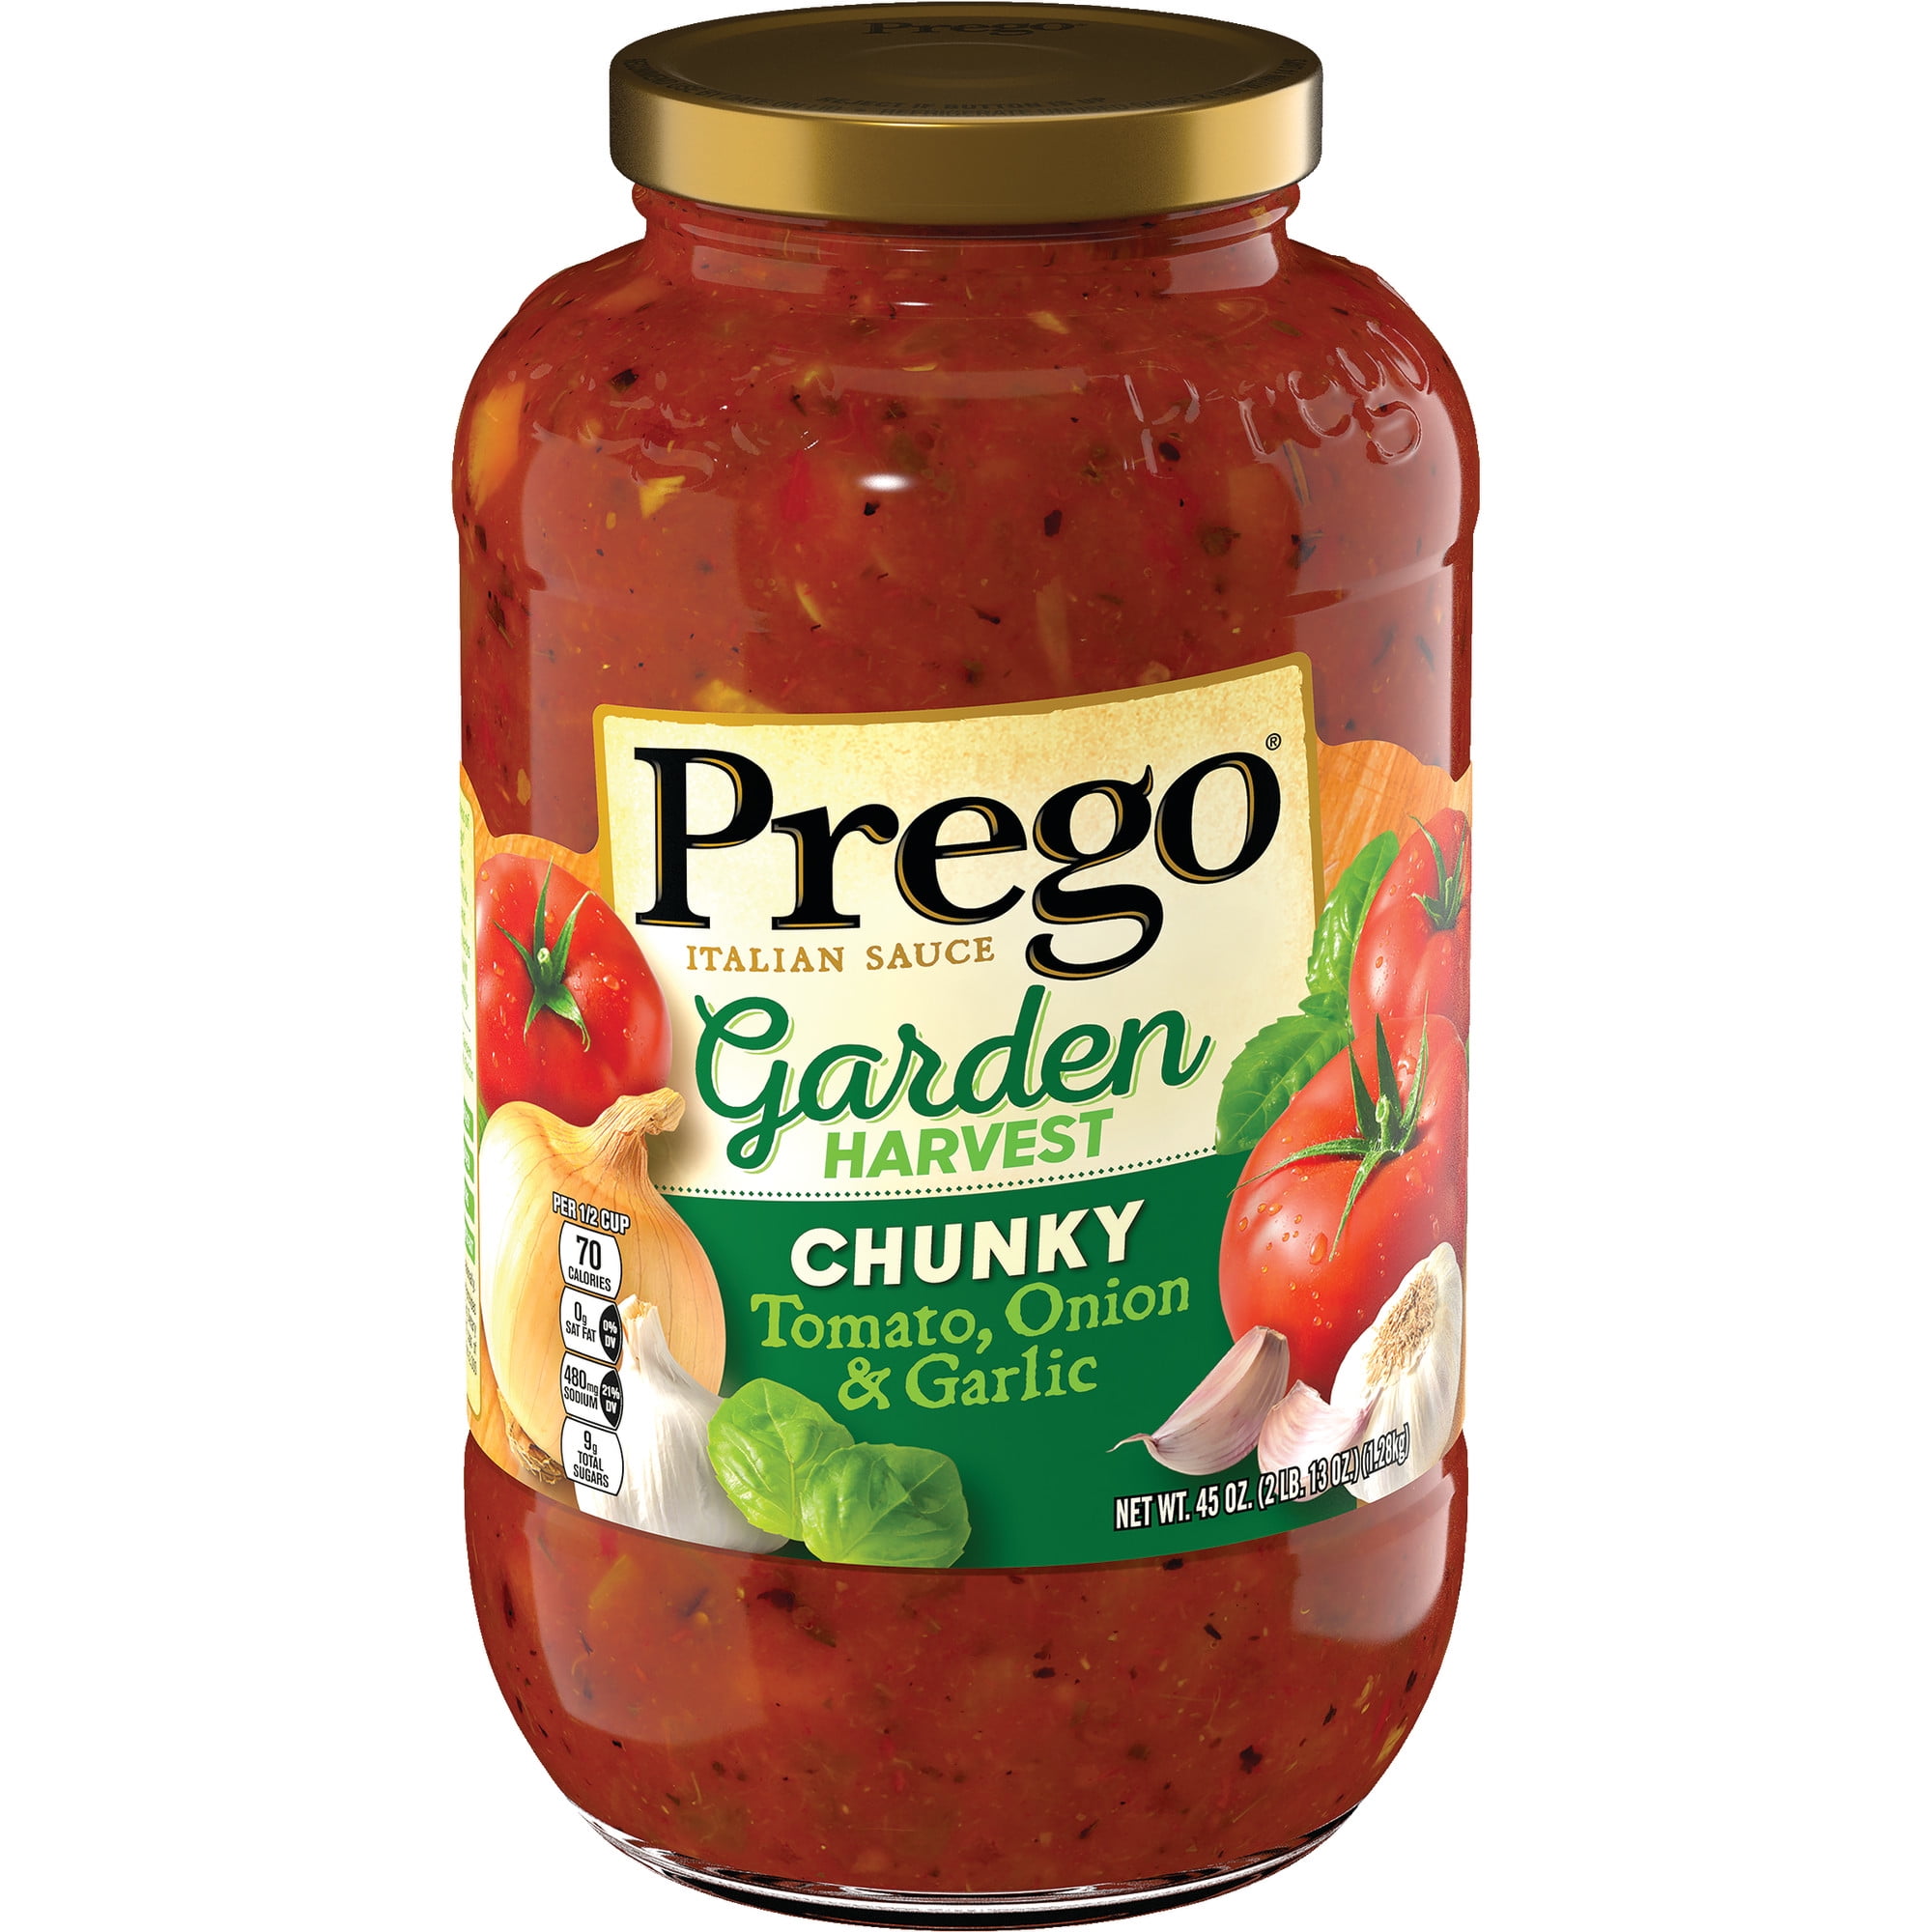 Prego Chunky Roasted Garlic and Herb Pasta Sauce, 23.75 OZ Jar